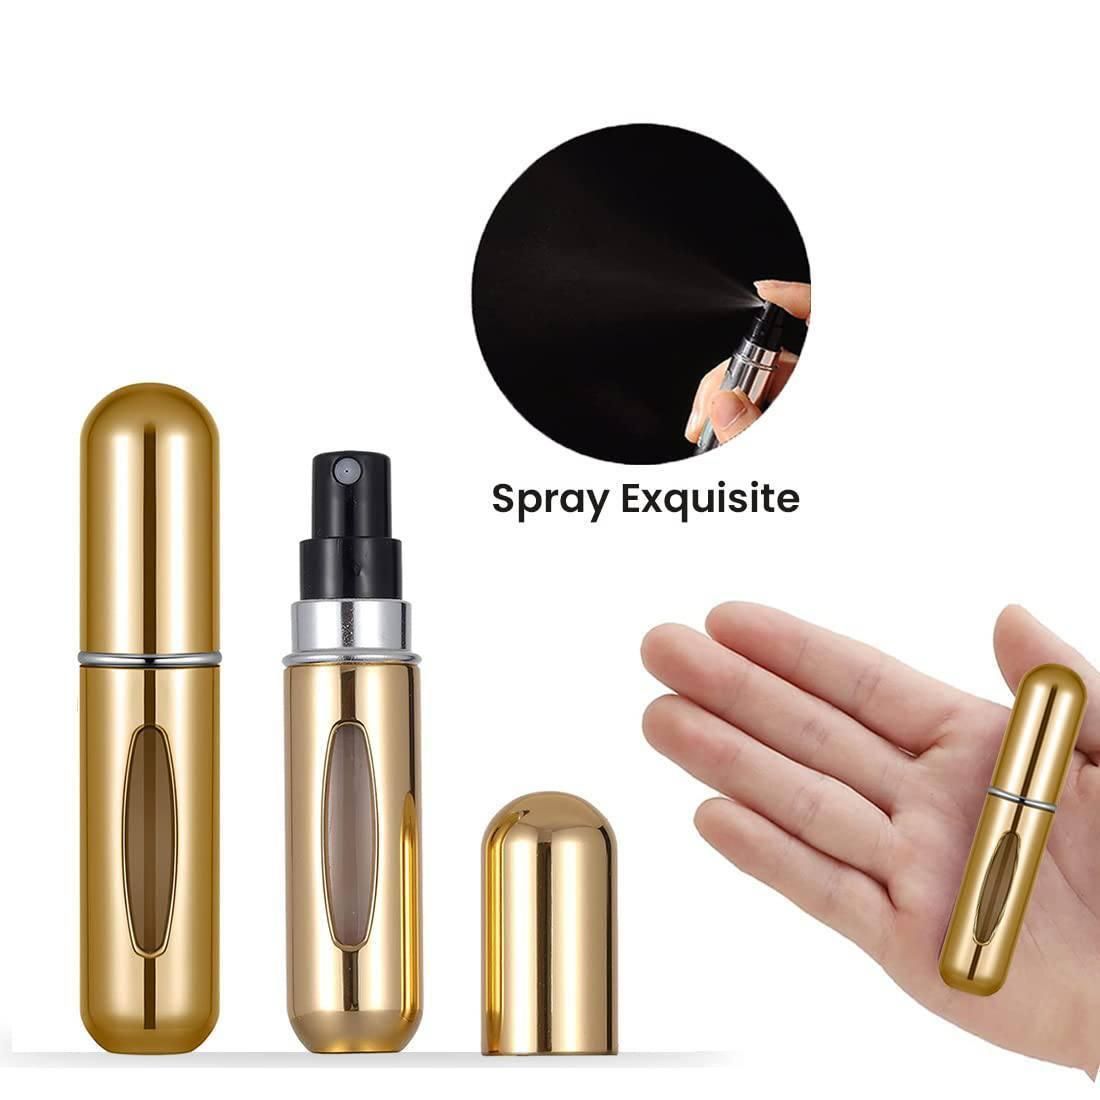 Portable Mini Refillable Perfume(Pack of 1)